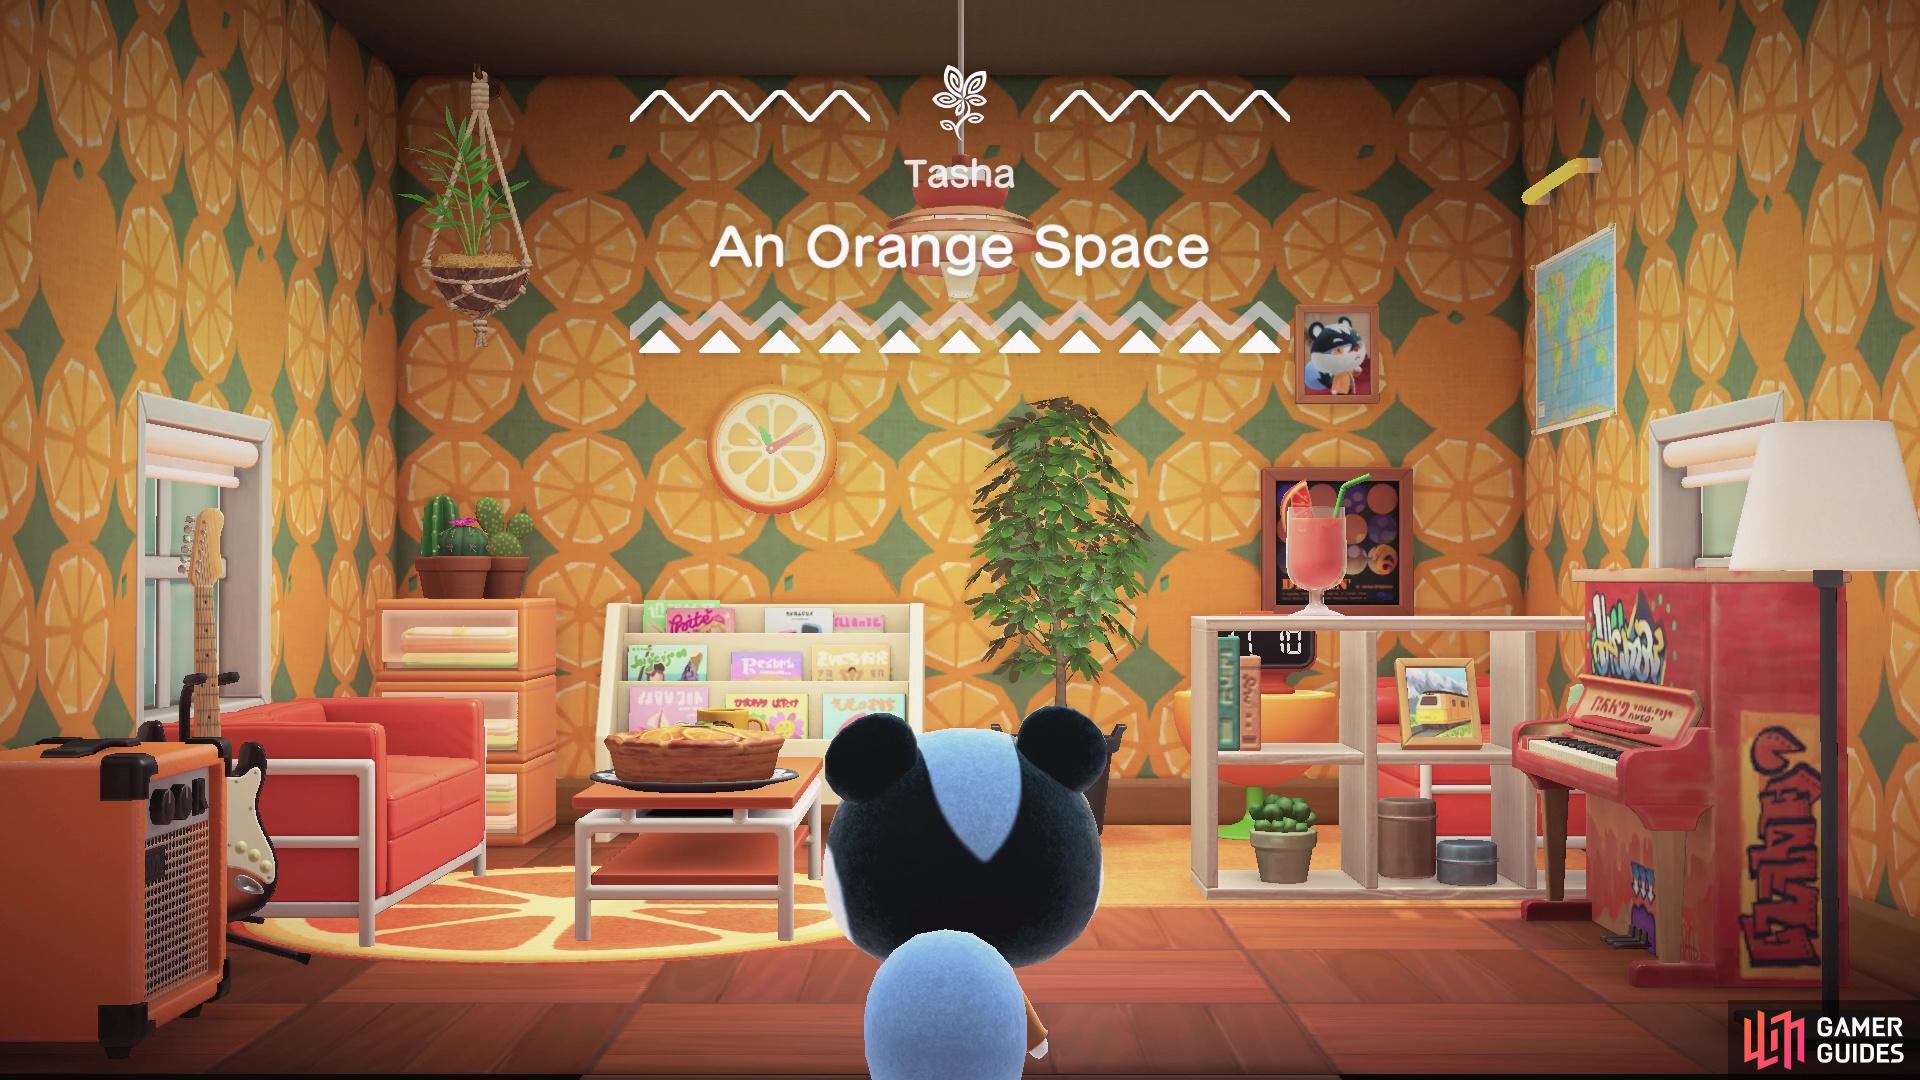 Tasha wants An Orange Space.